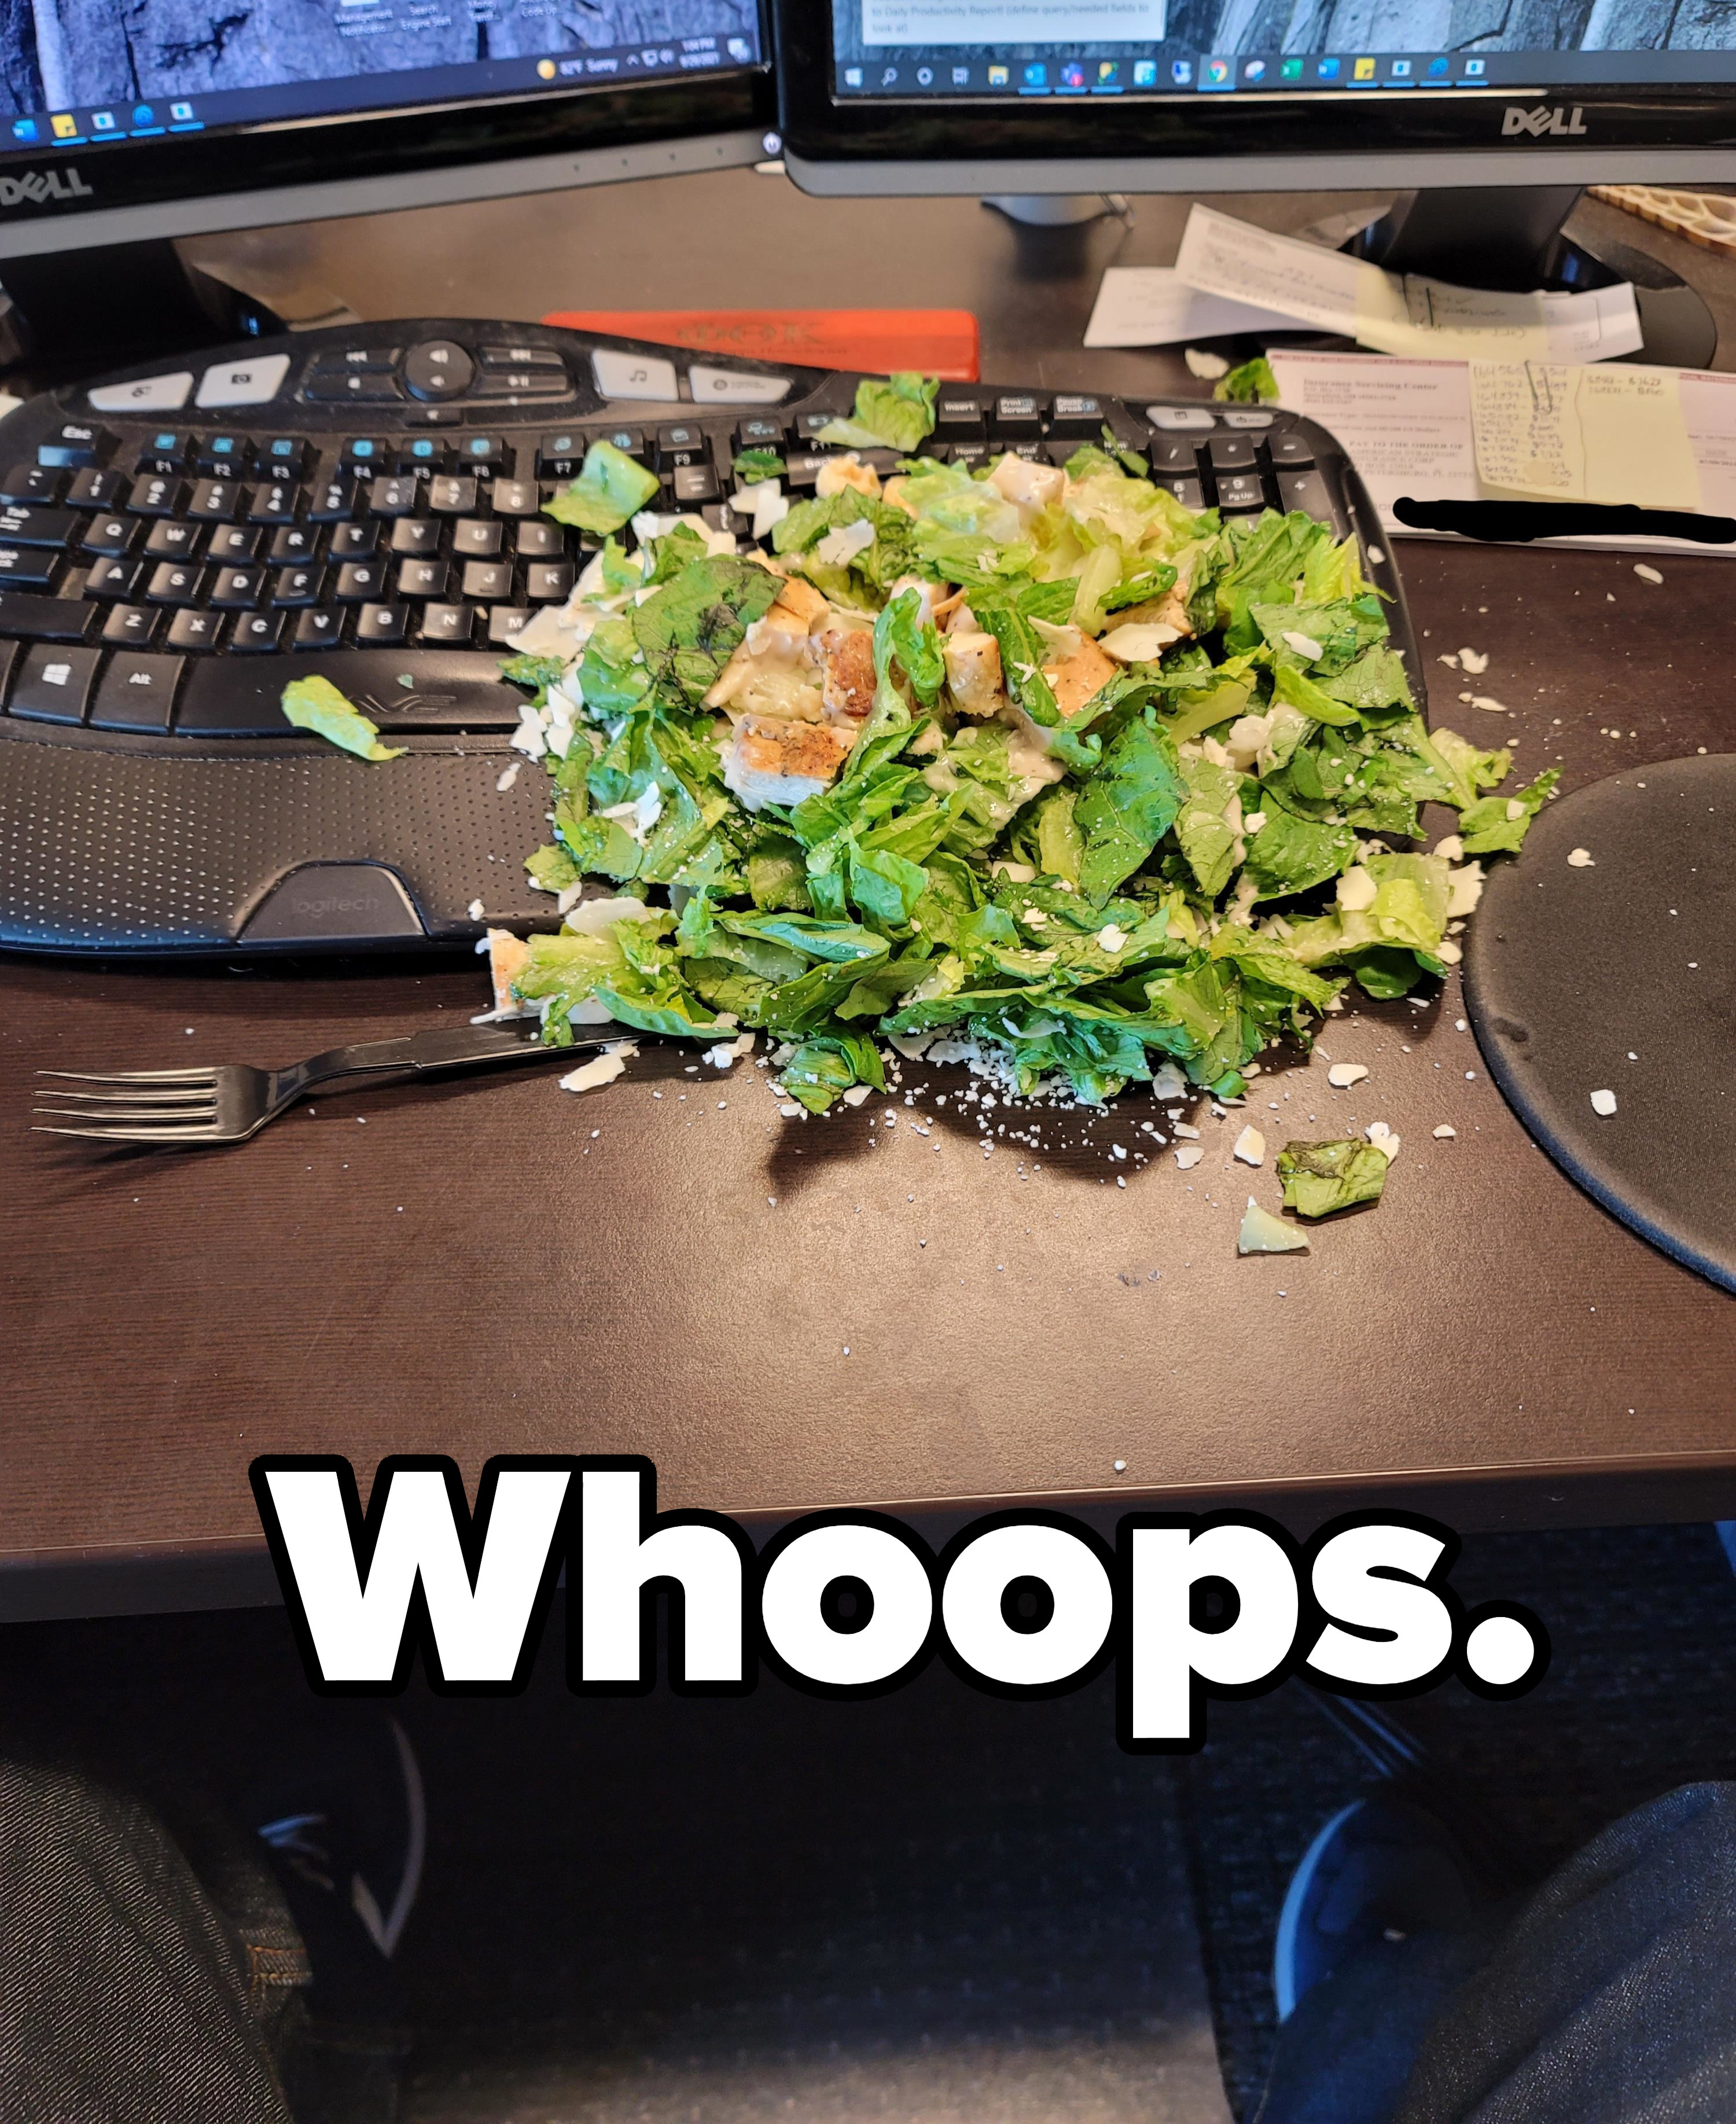 salad spilled over a computer keyboard